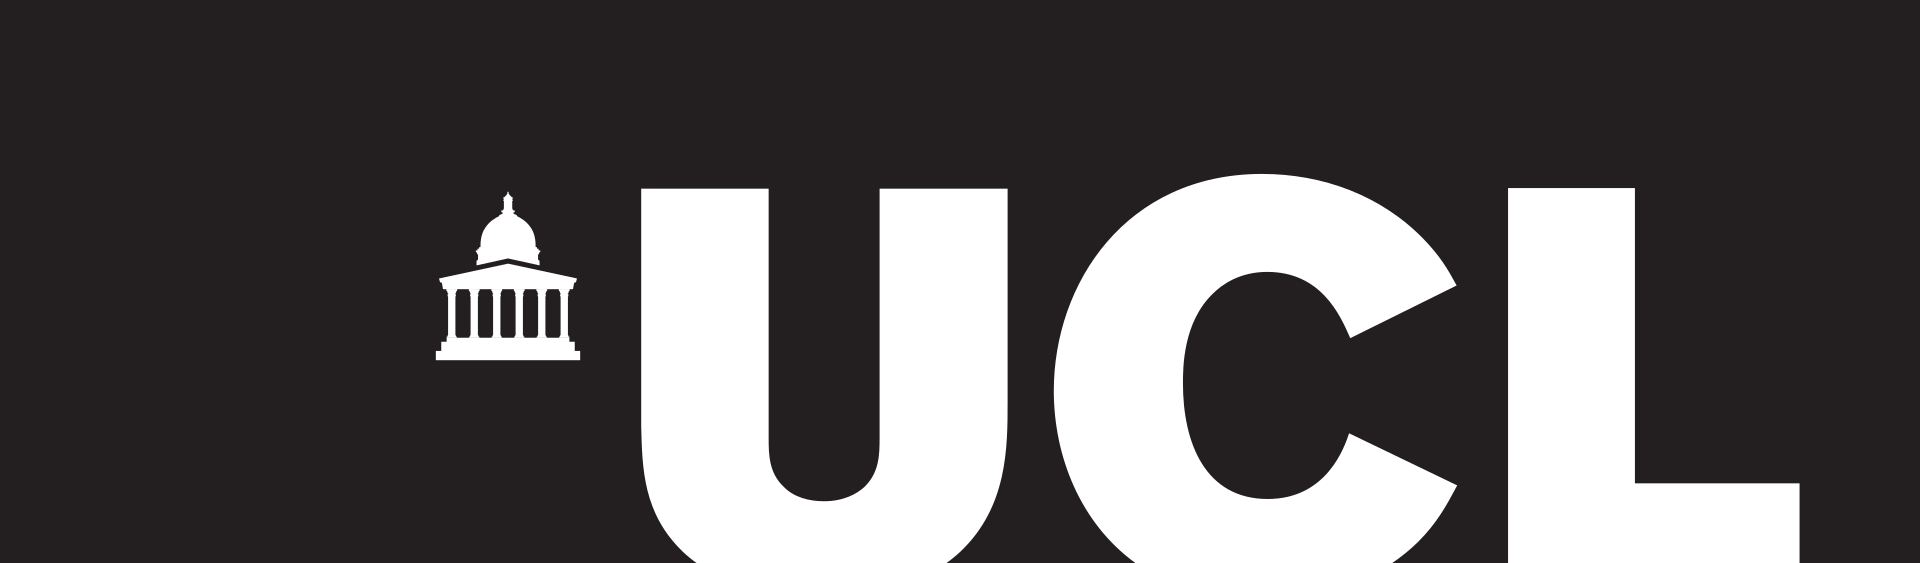 UCL - University College London - Университетский колледж Лондона